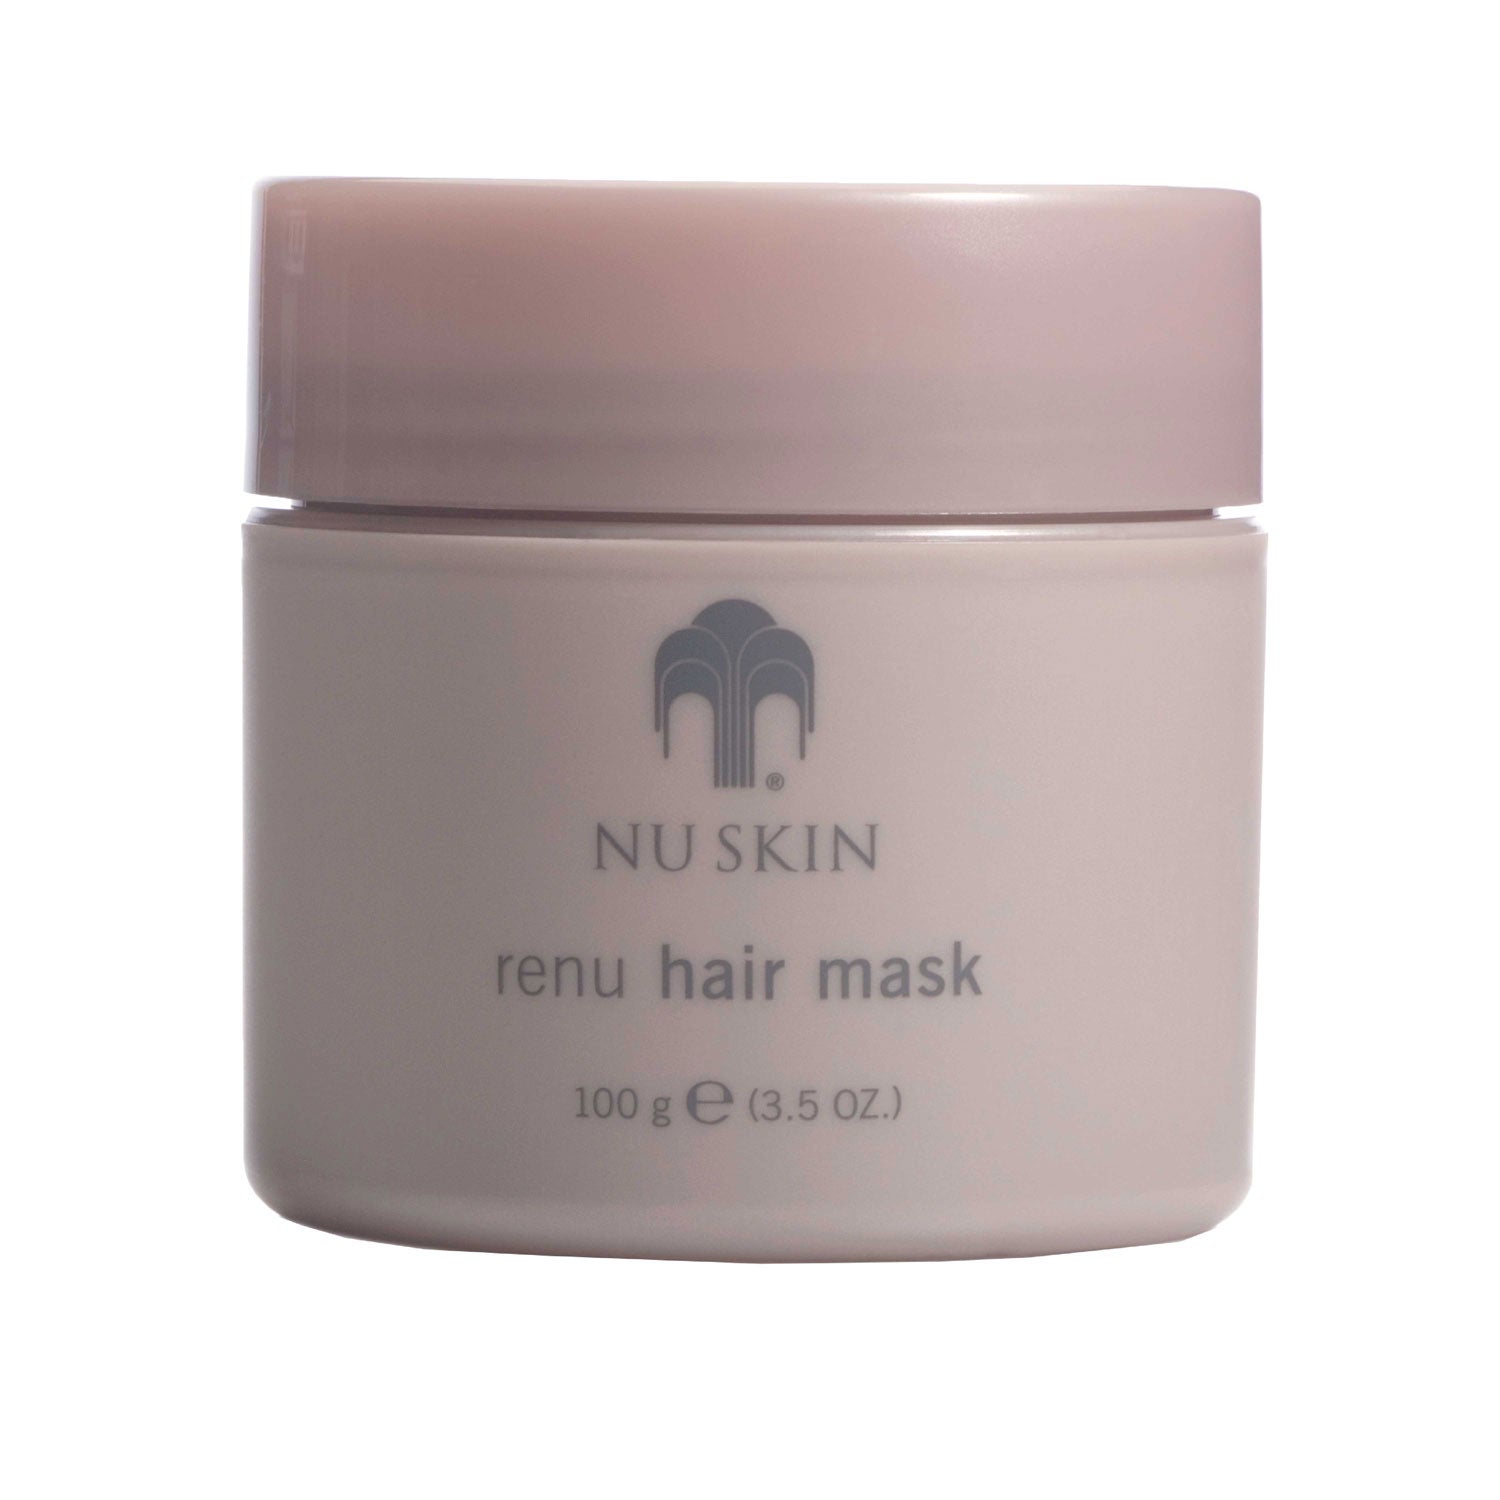 renu hair mask